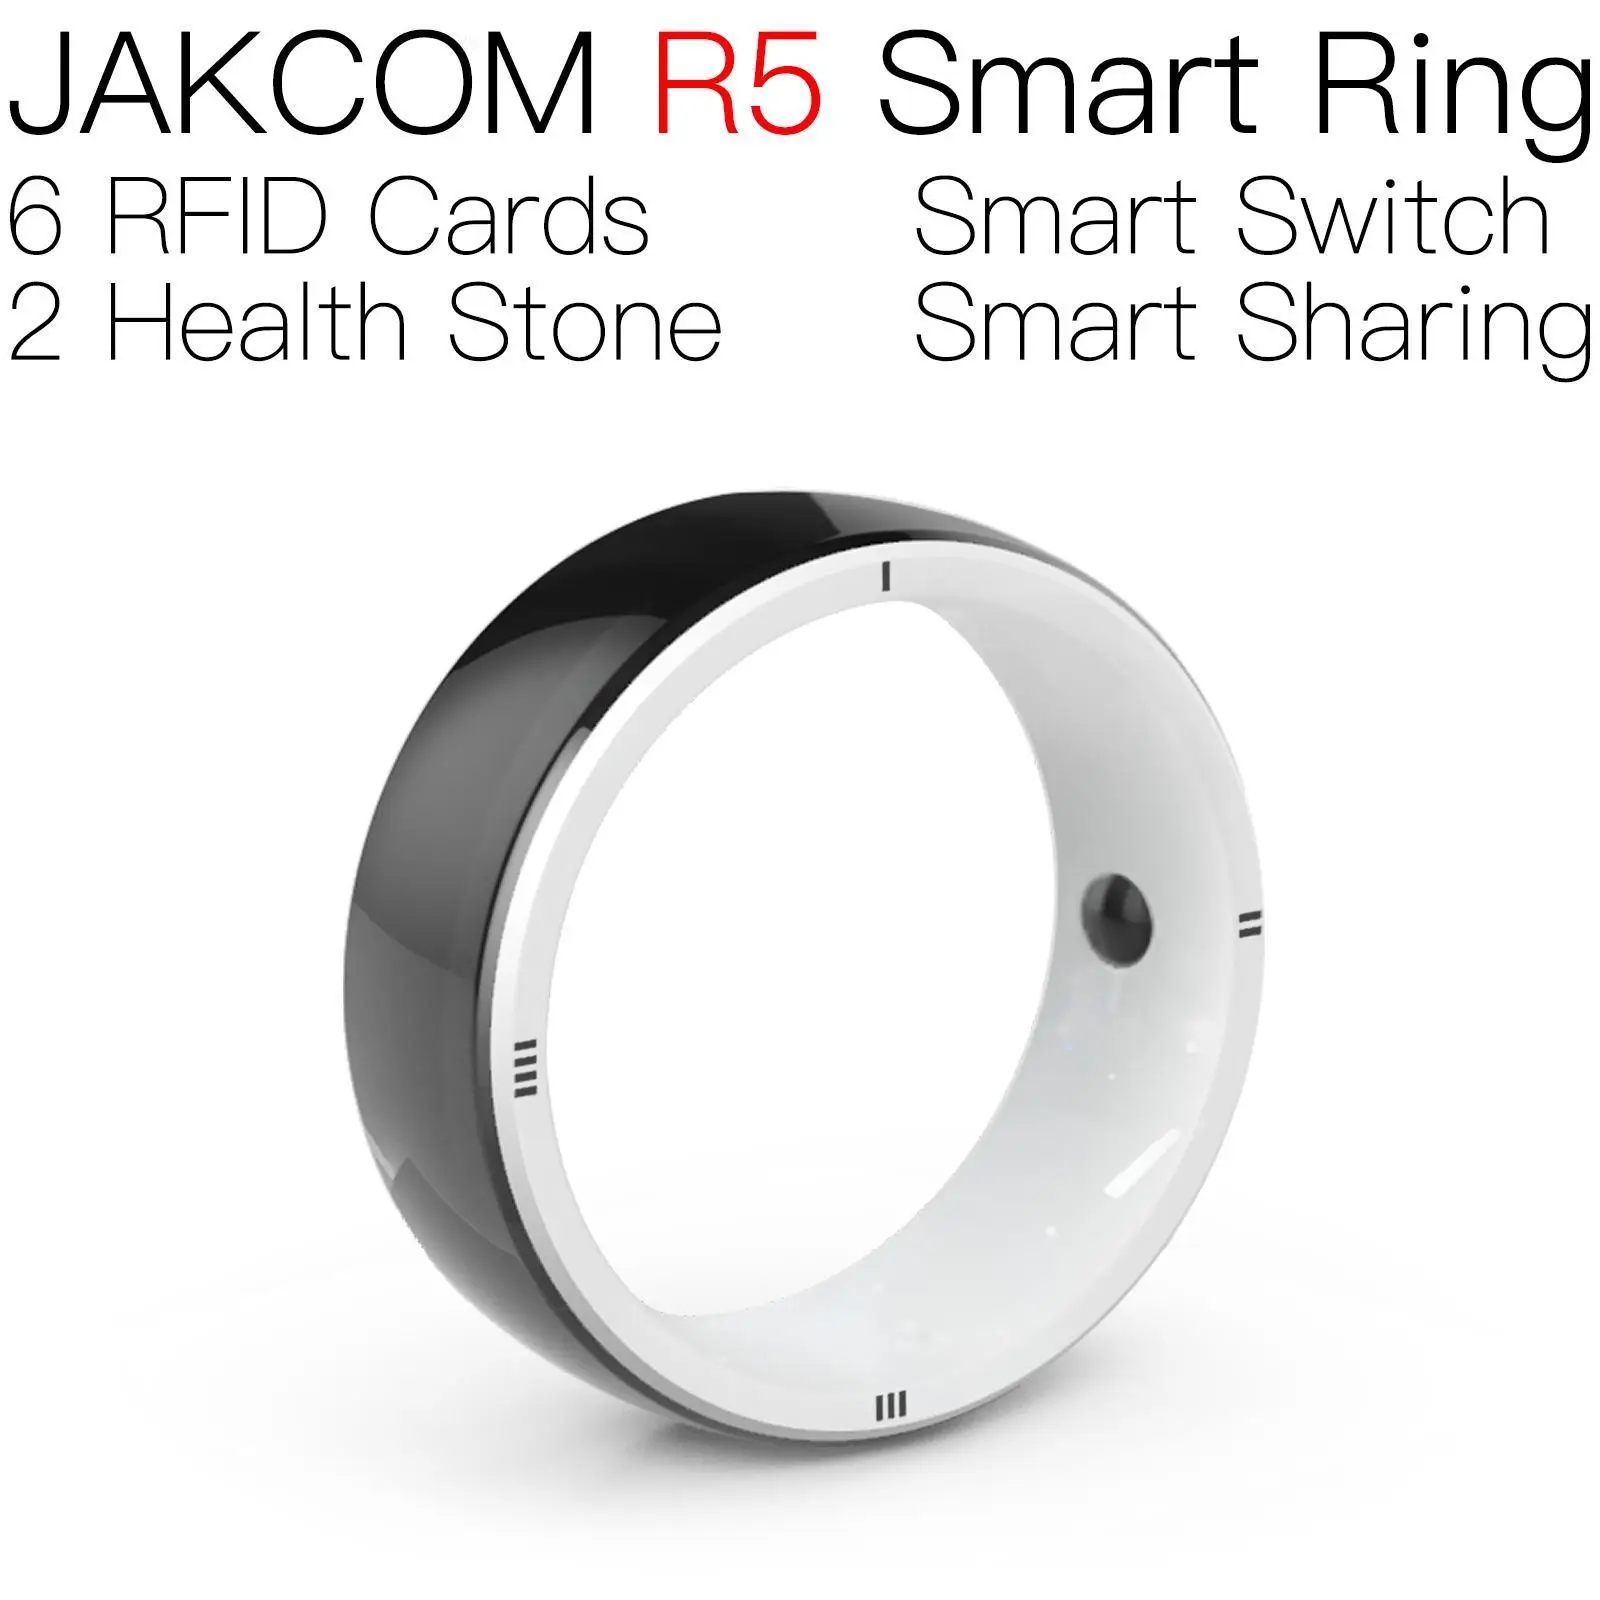 

JAKCOM R5 Smart Ring Nice than tessera nfc mct s50 usb nfs rfid rf id card mag stripe coxy life smart tag electronic magnet